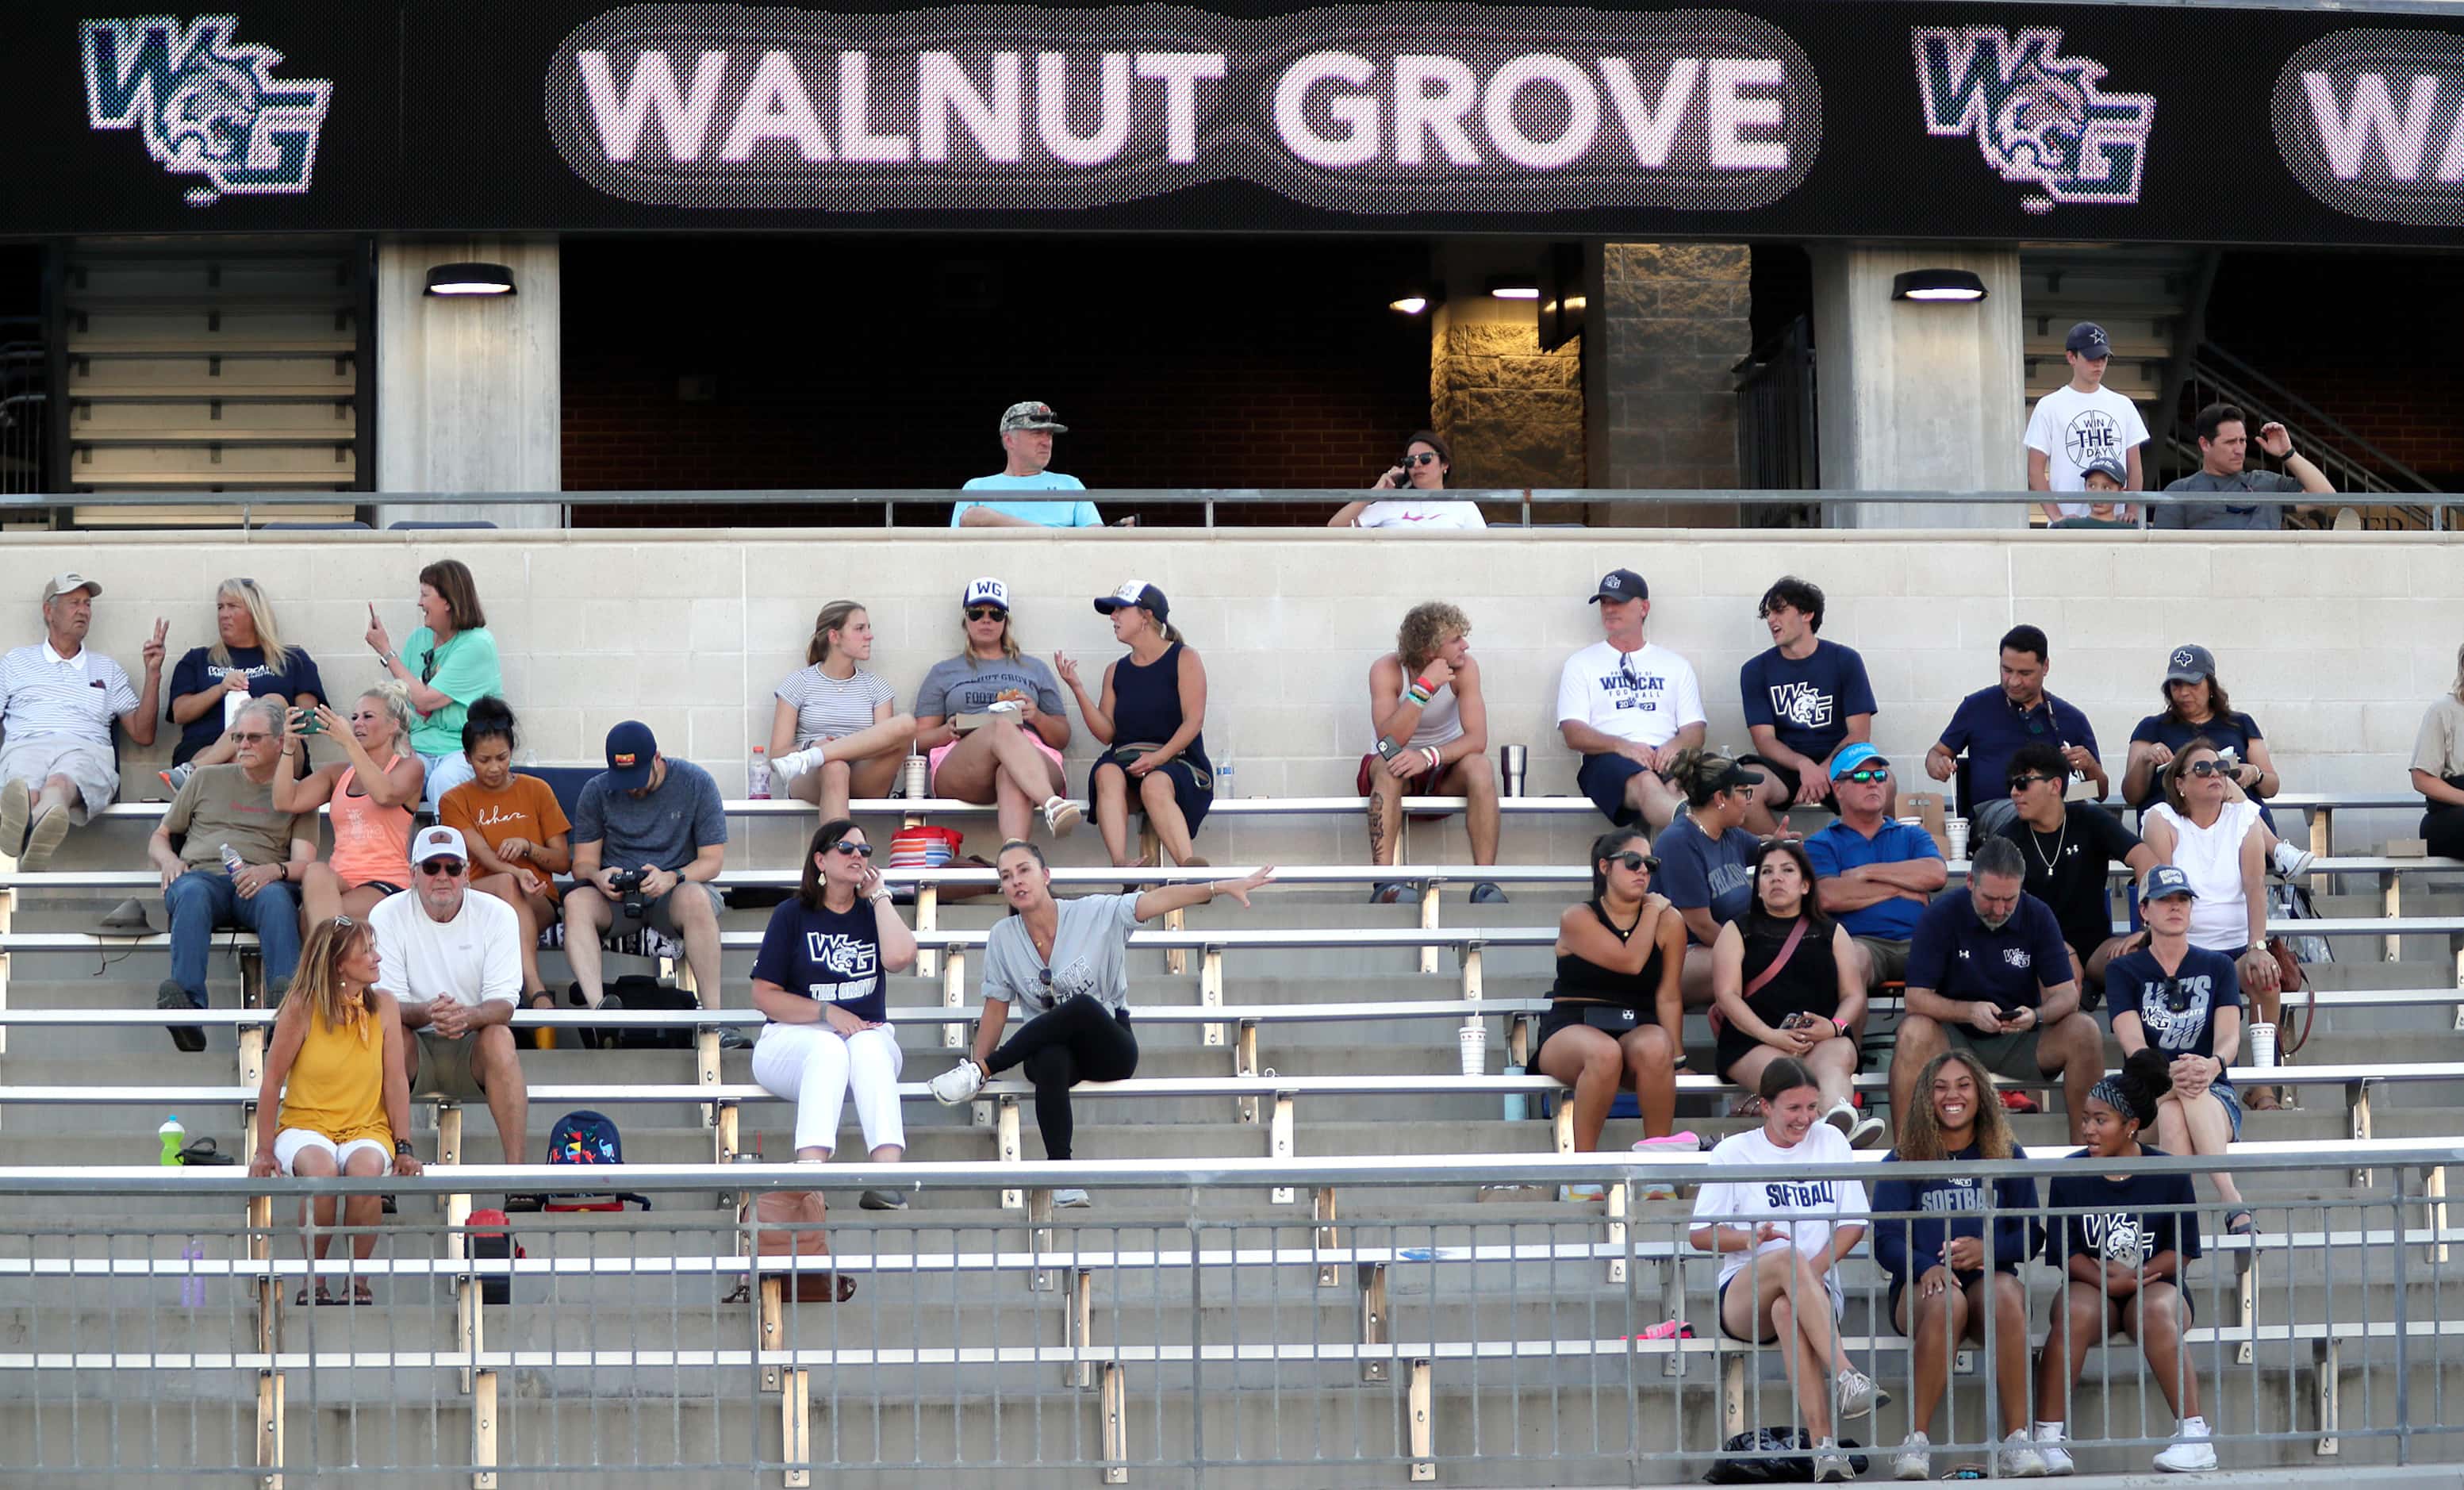 Fans for the new high school football team showed up despite the heat as Walnut Grove High...